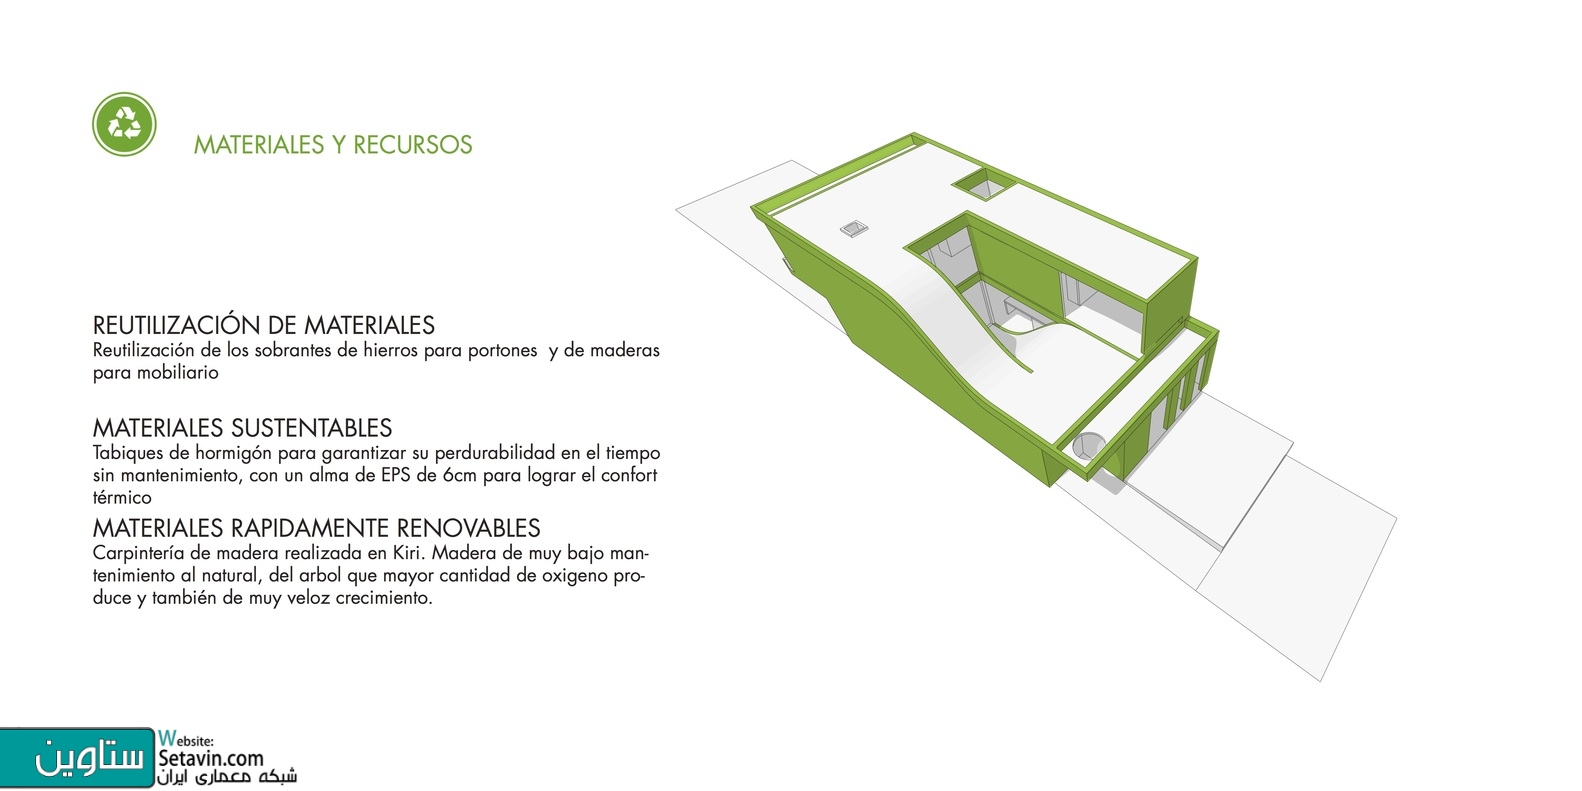 خانه مسکونی , MeMo , تیم طراحی , Bam Arquitectura , آرژانتین , MeMo House , House , مسکونی , خانه , BAM! arquitectura , Argentina